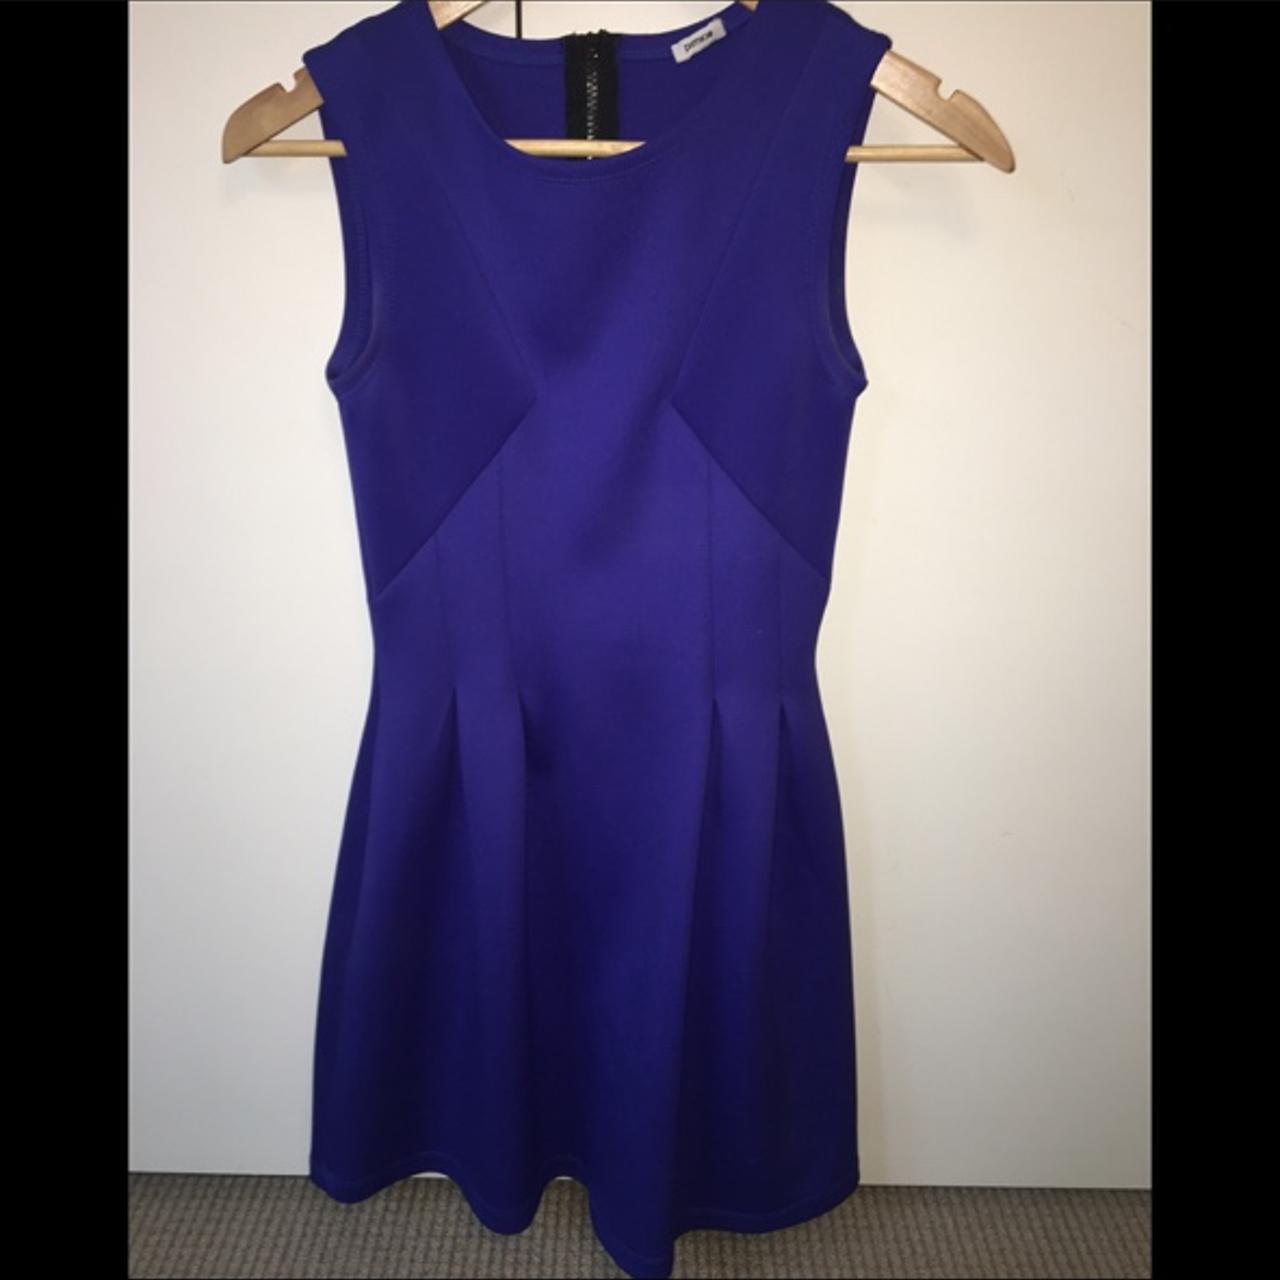 Blue dress size S / UK 8. Bought in France #dress... - Depop